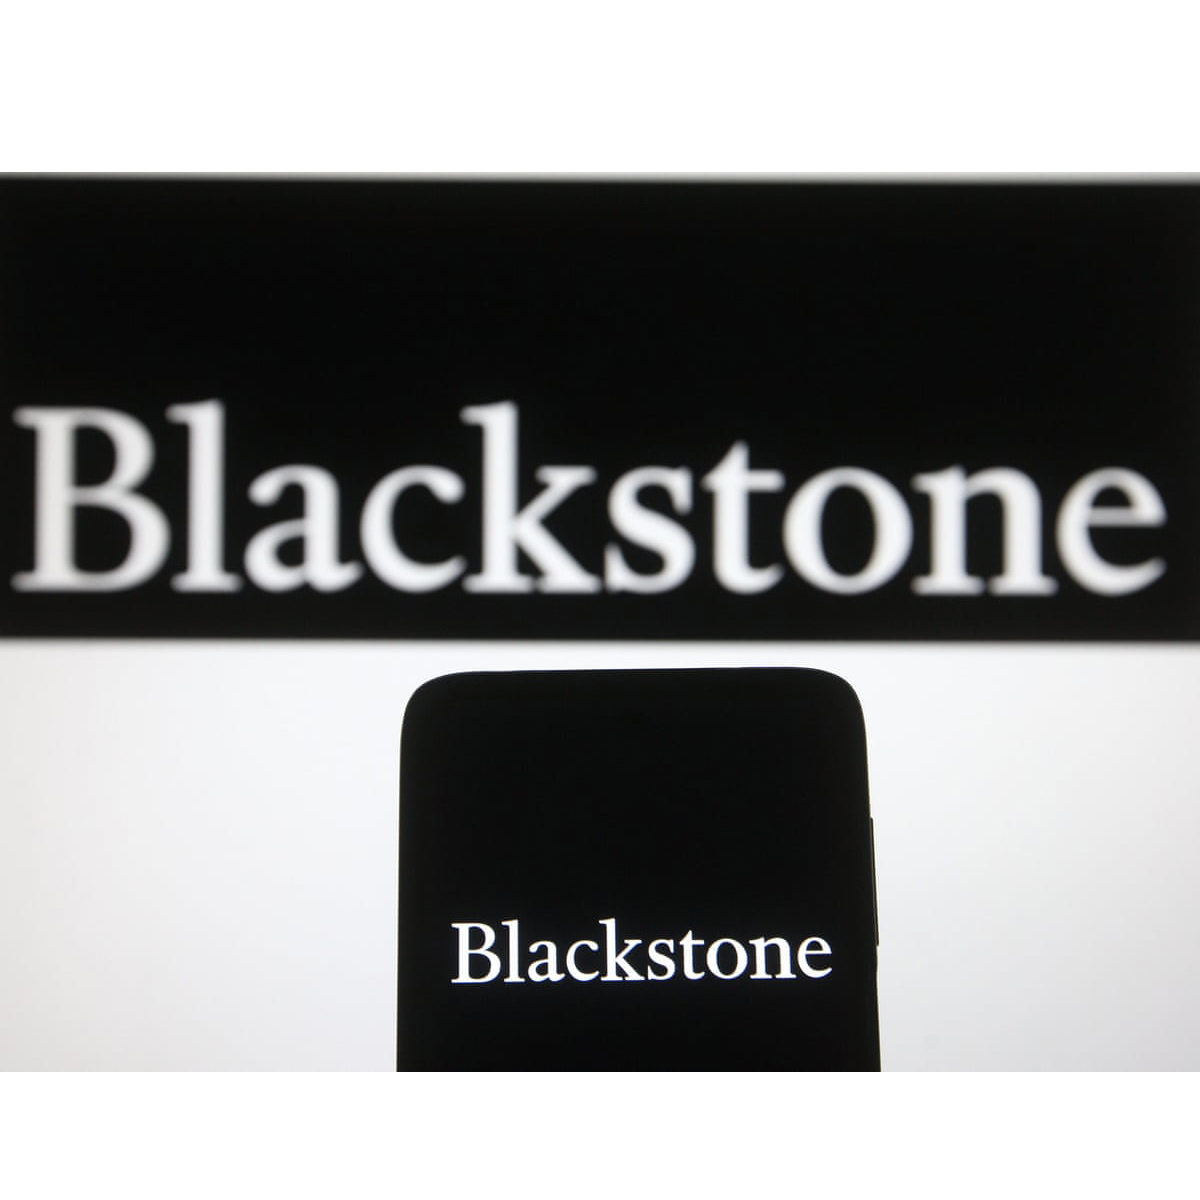 Six Billion Dollars to Be Spent By Blackstone